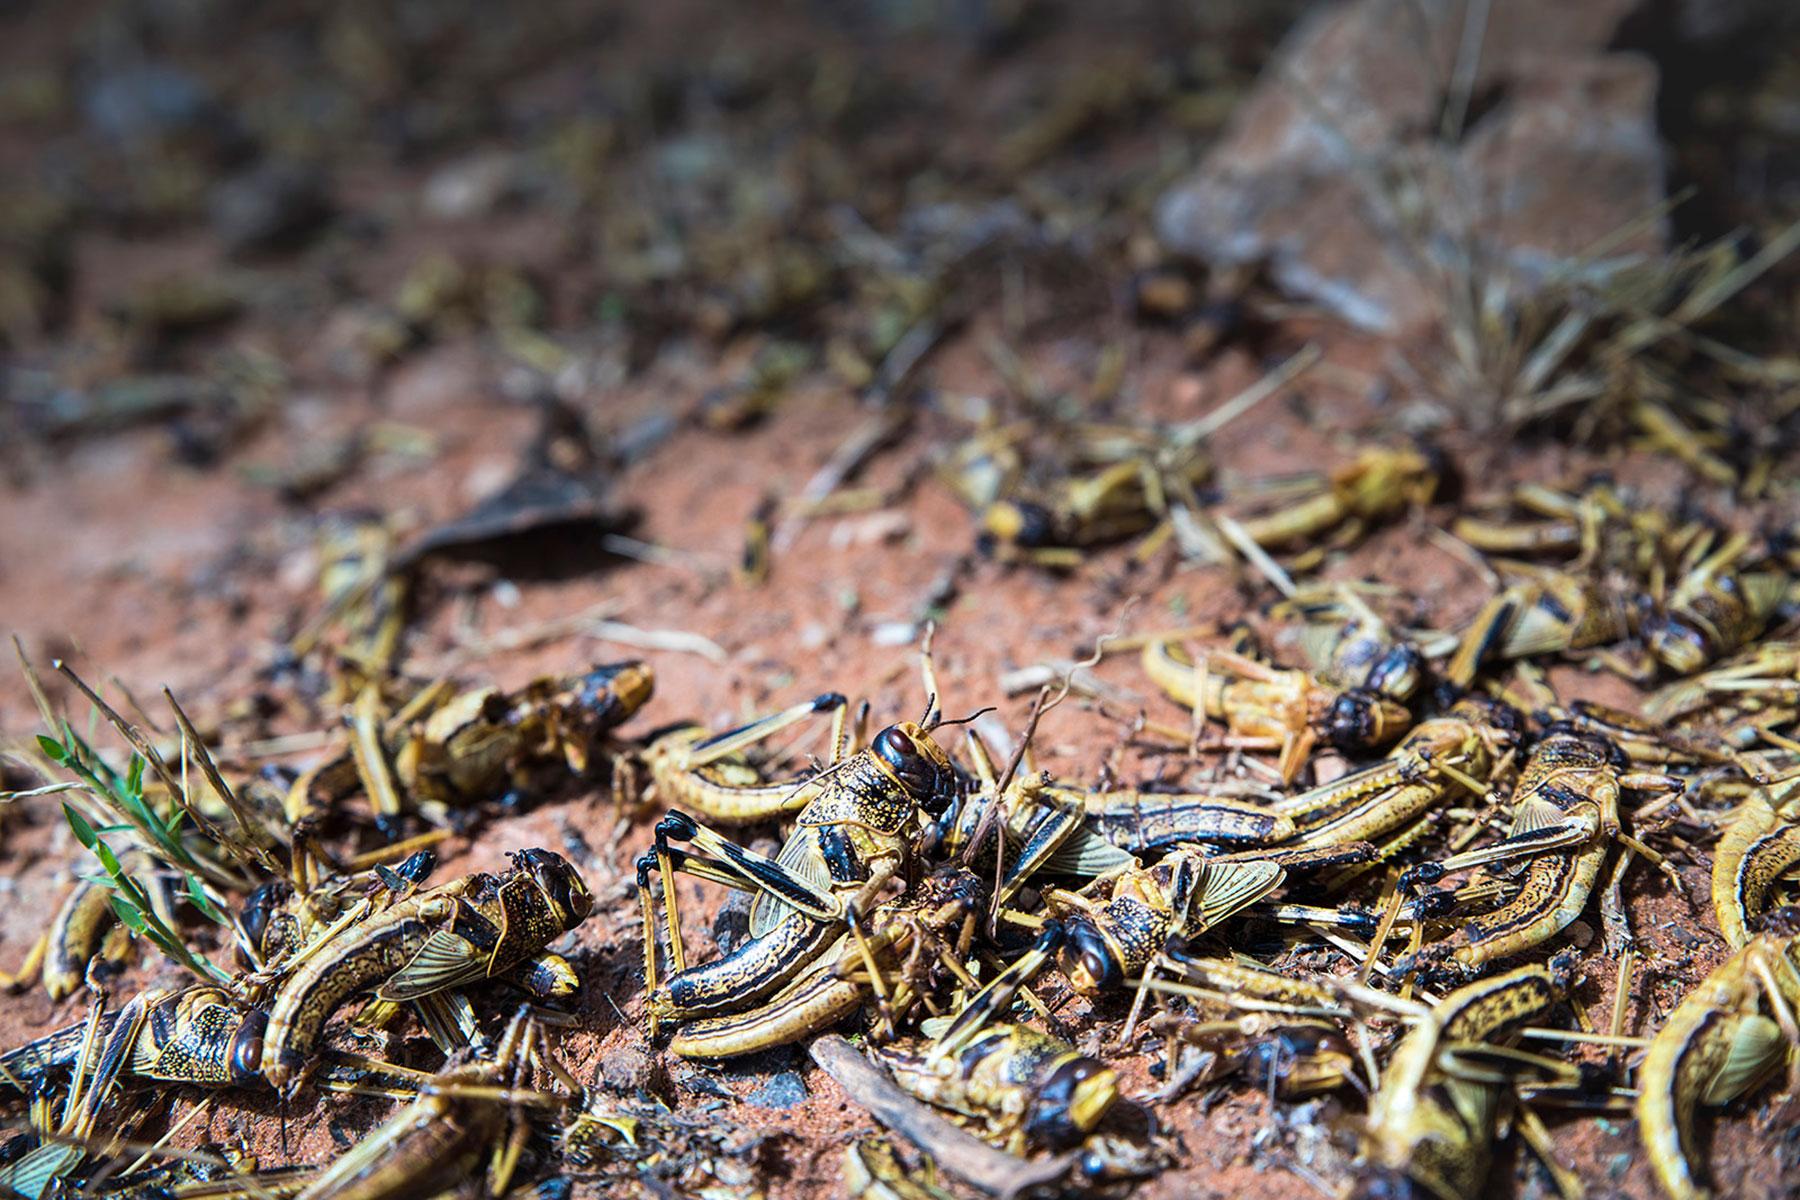 Dead locusts in Shilabo, Ethiopiaâs Somali region, December 2019. Many locust have died as a result of spraying. Photo: FAO/Petterik Wiggers